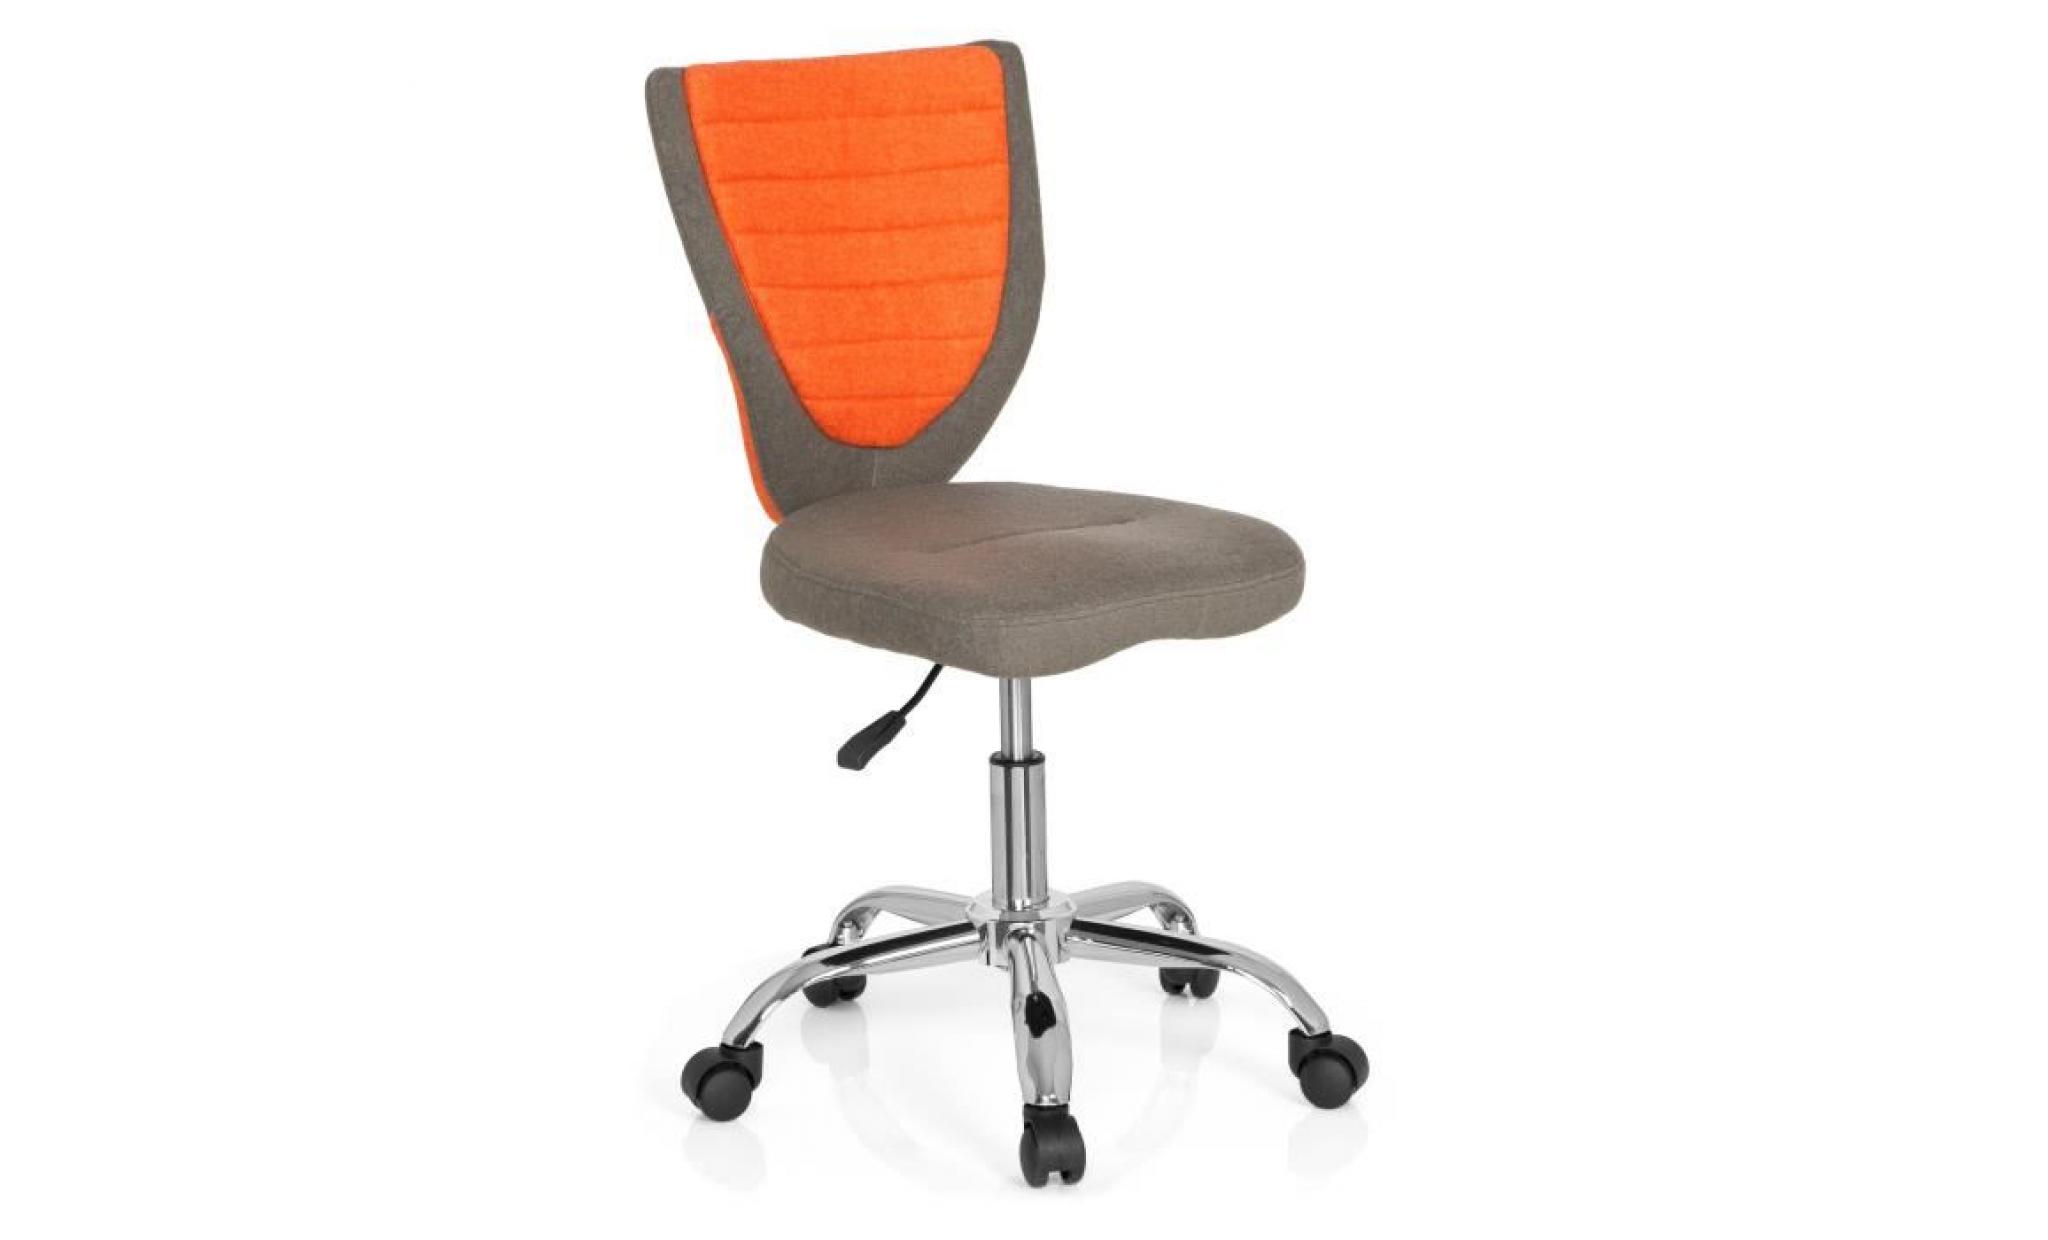 siège de bureau enfant / siège pivotant kiddy comfort tissu gris/orange hjh office